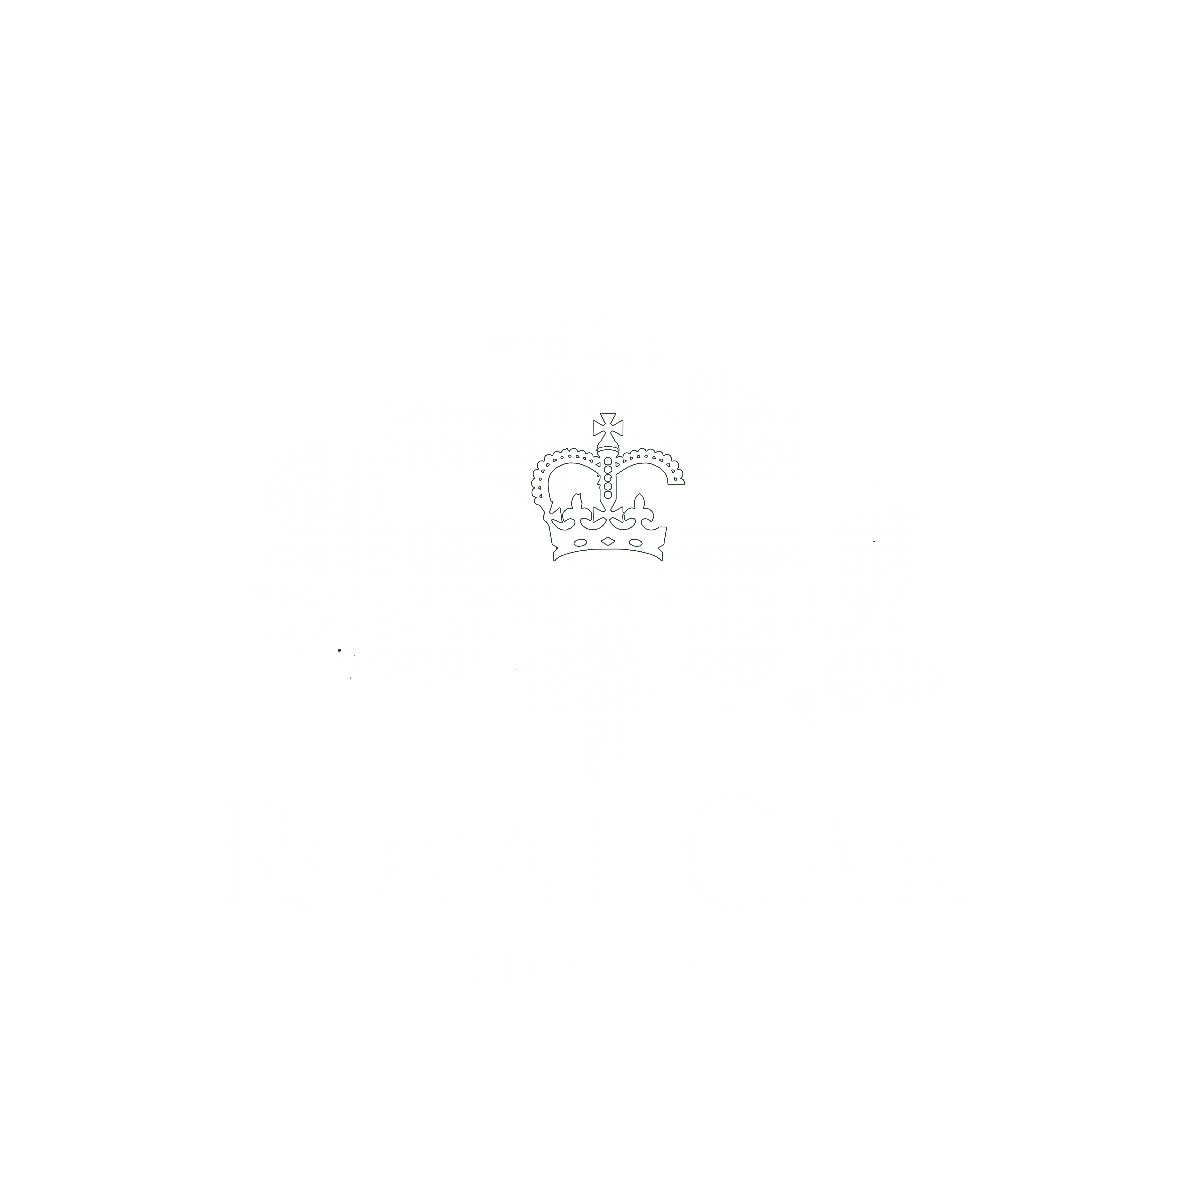 Royal Oak Hotel